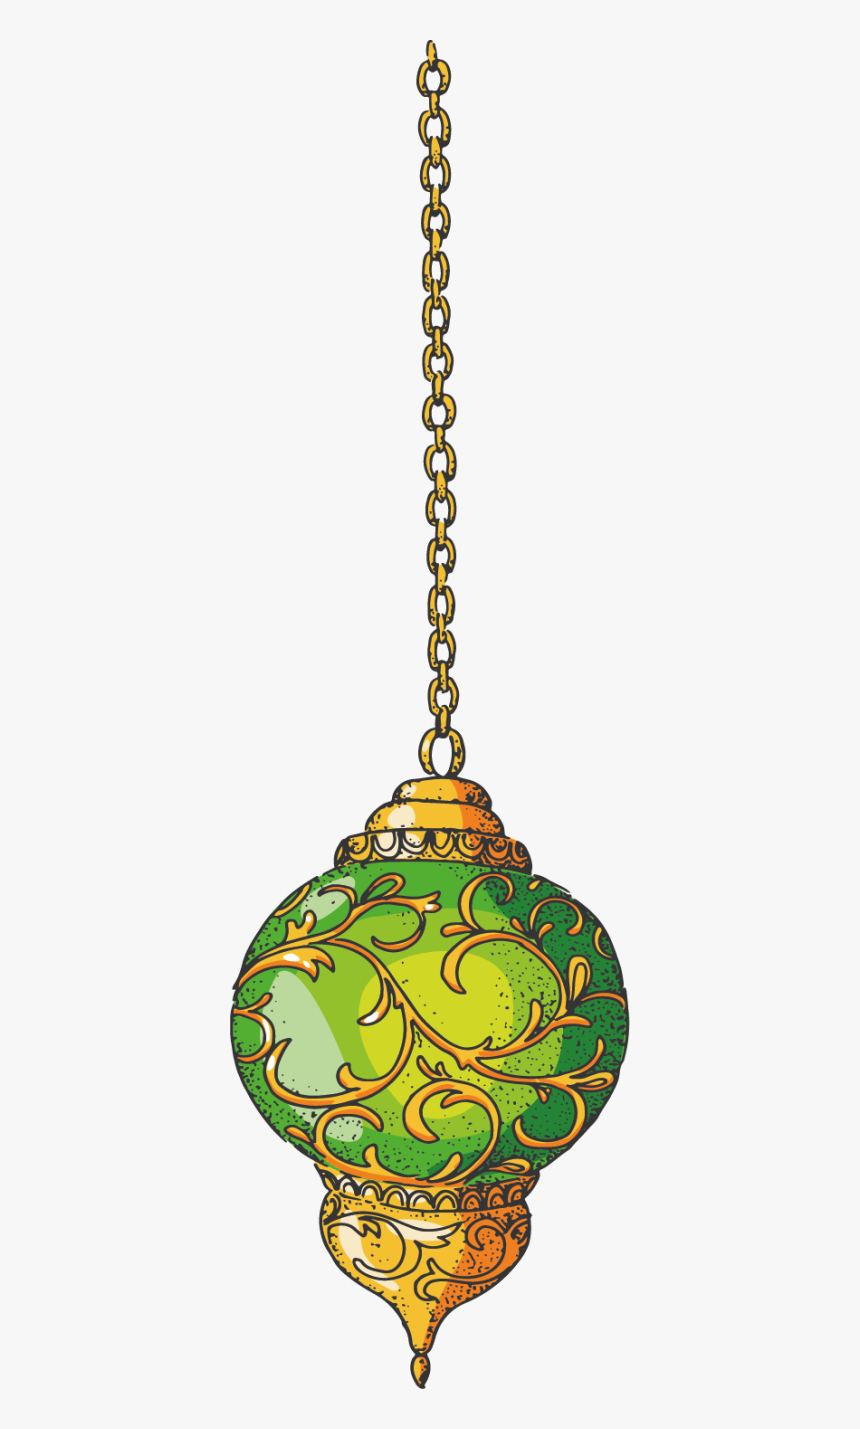 فوانيس رمضان للتصميم, HD Png Download, Free Download